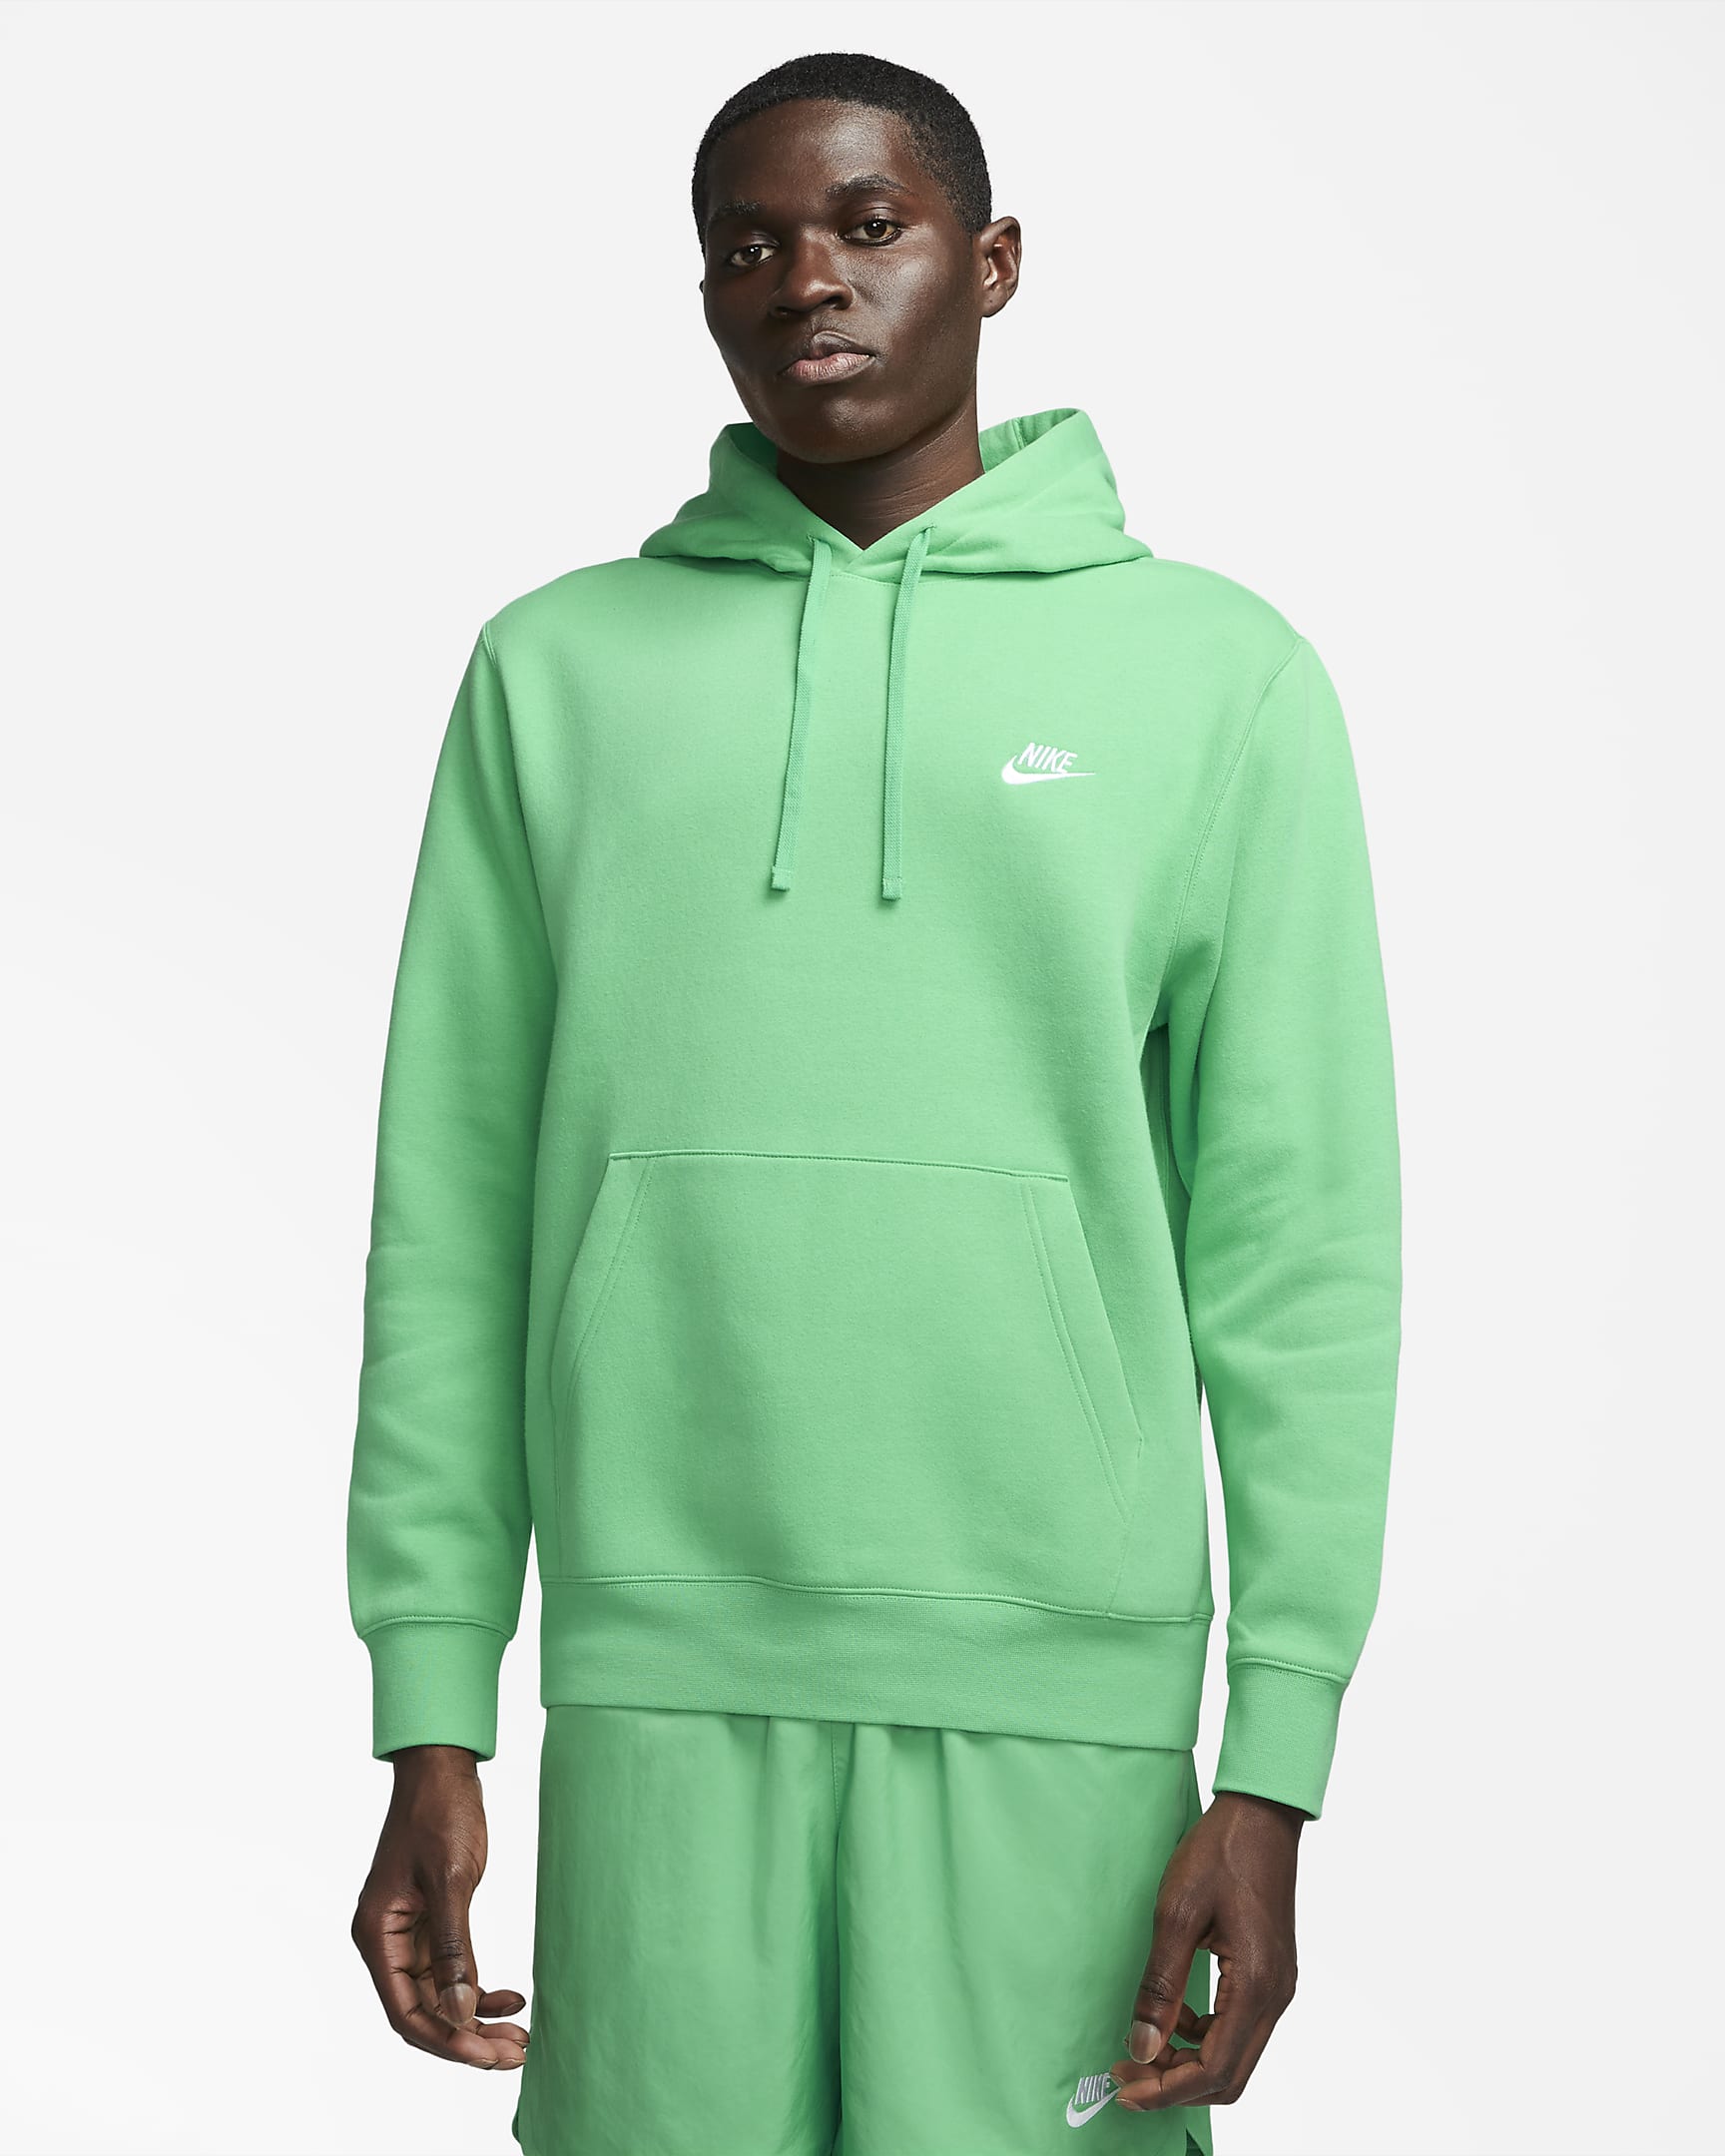 Ensemble Nike vert lime 💚